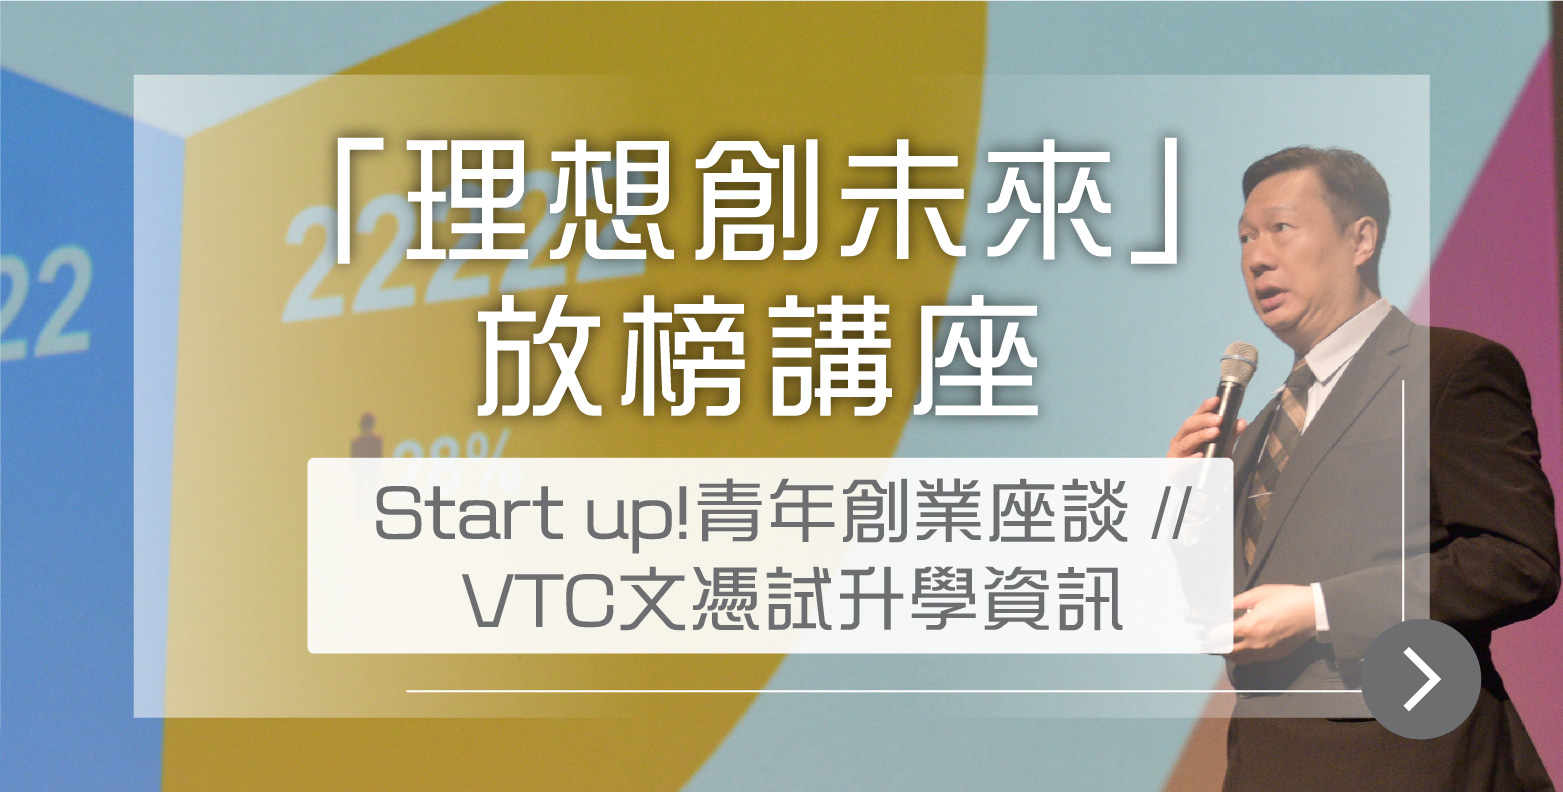 VTC放榜講座提供年輕創業家分享及DSE放榜出路資訊